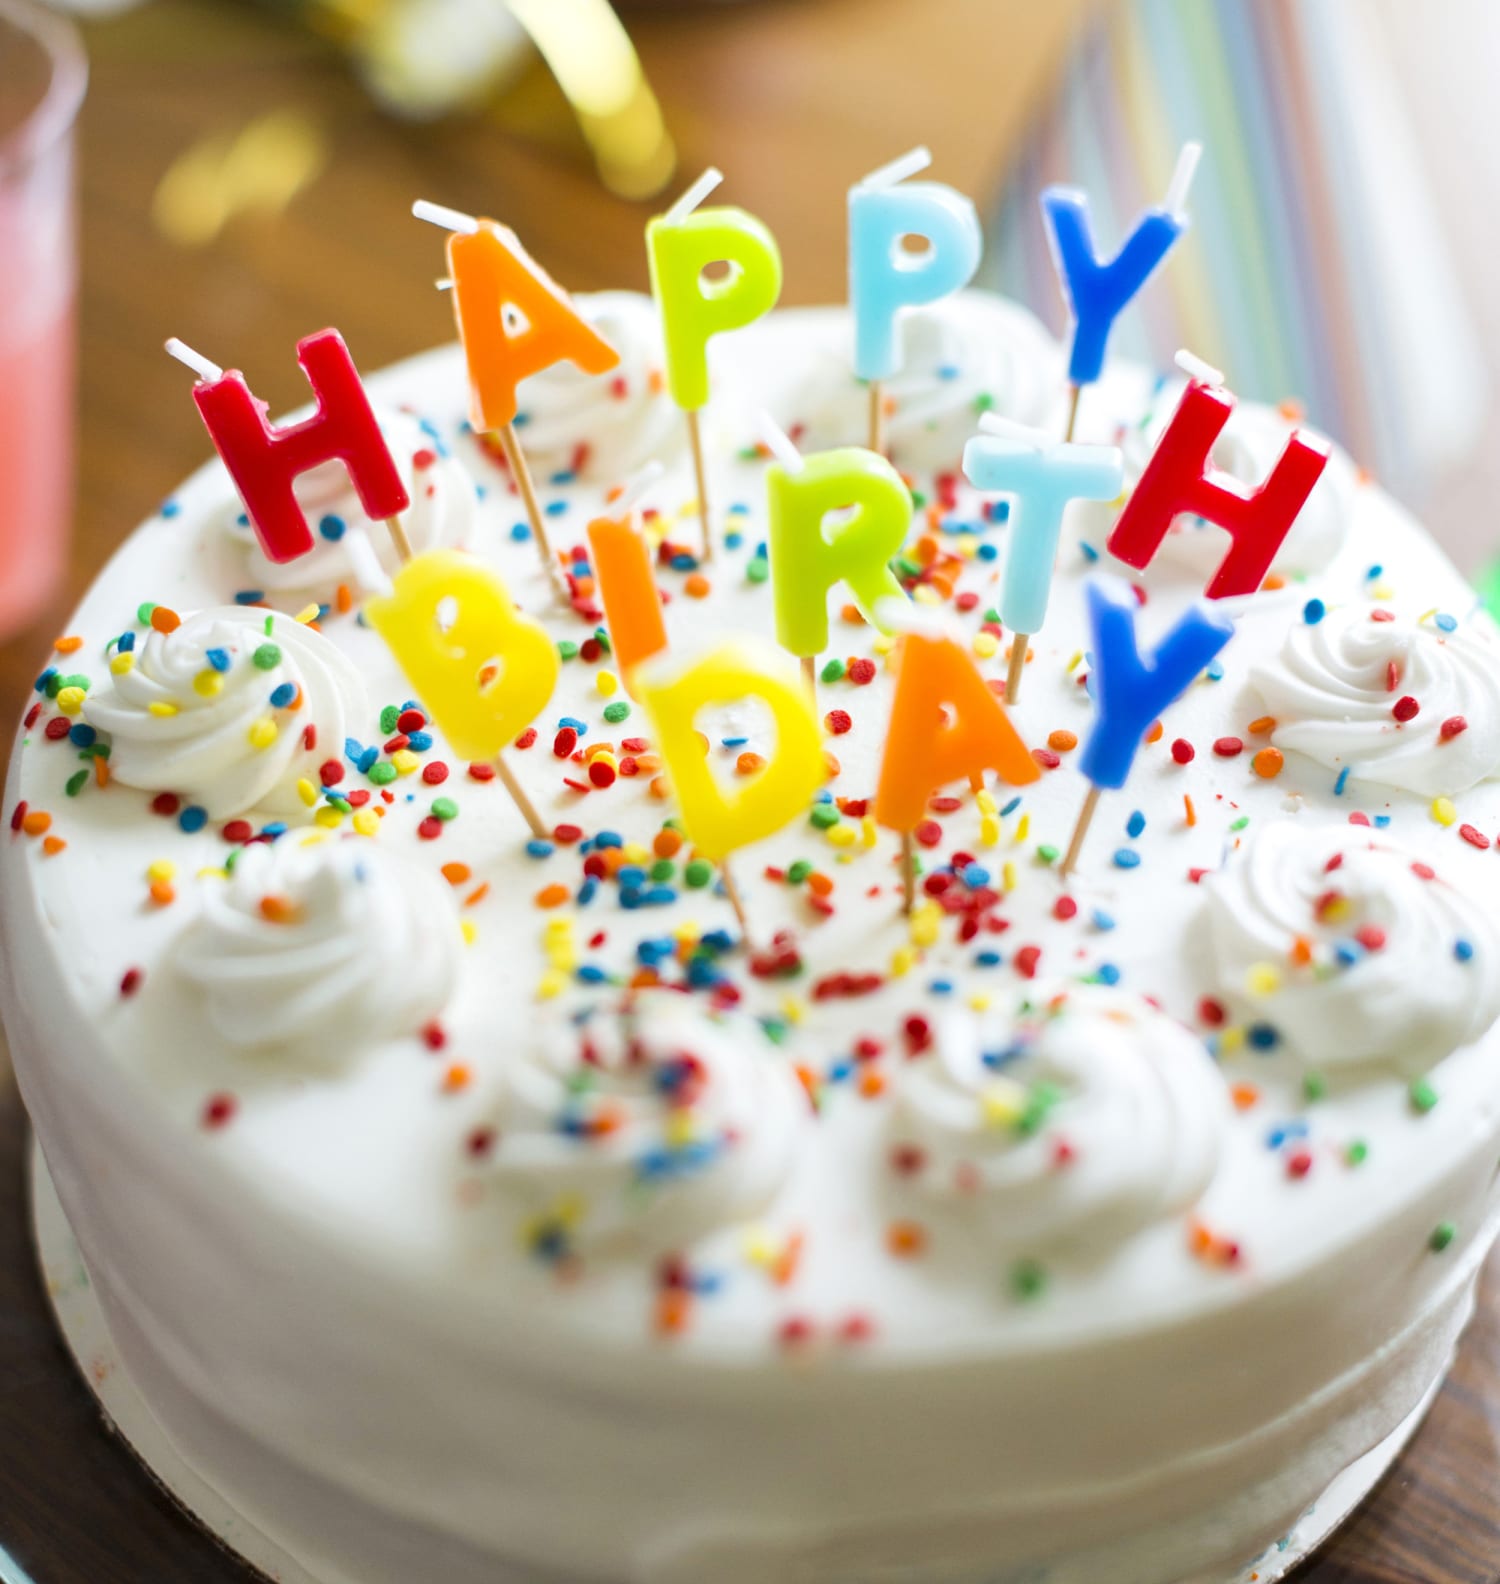 Happy Birthday to You - Wikipedia